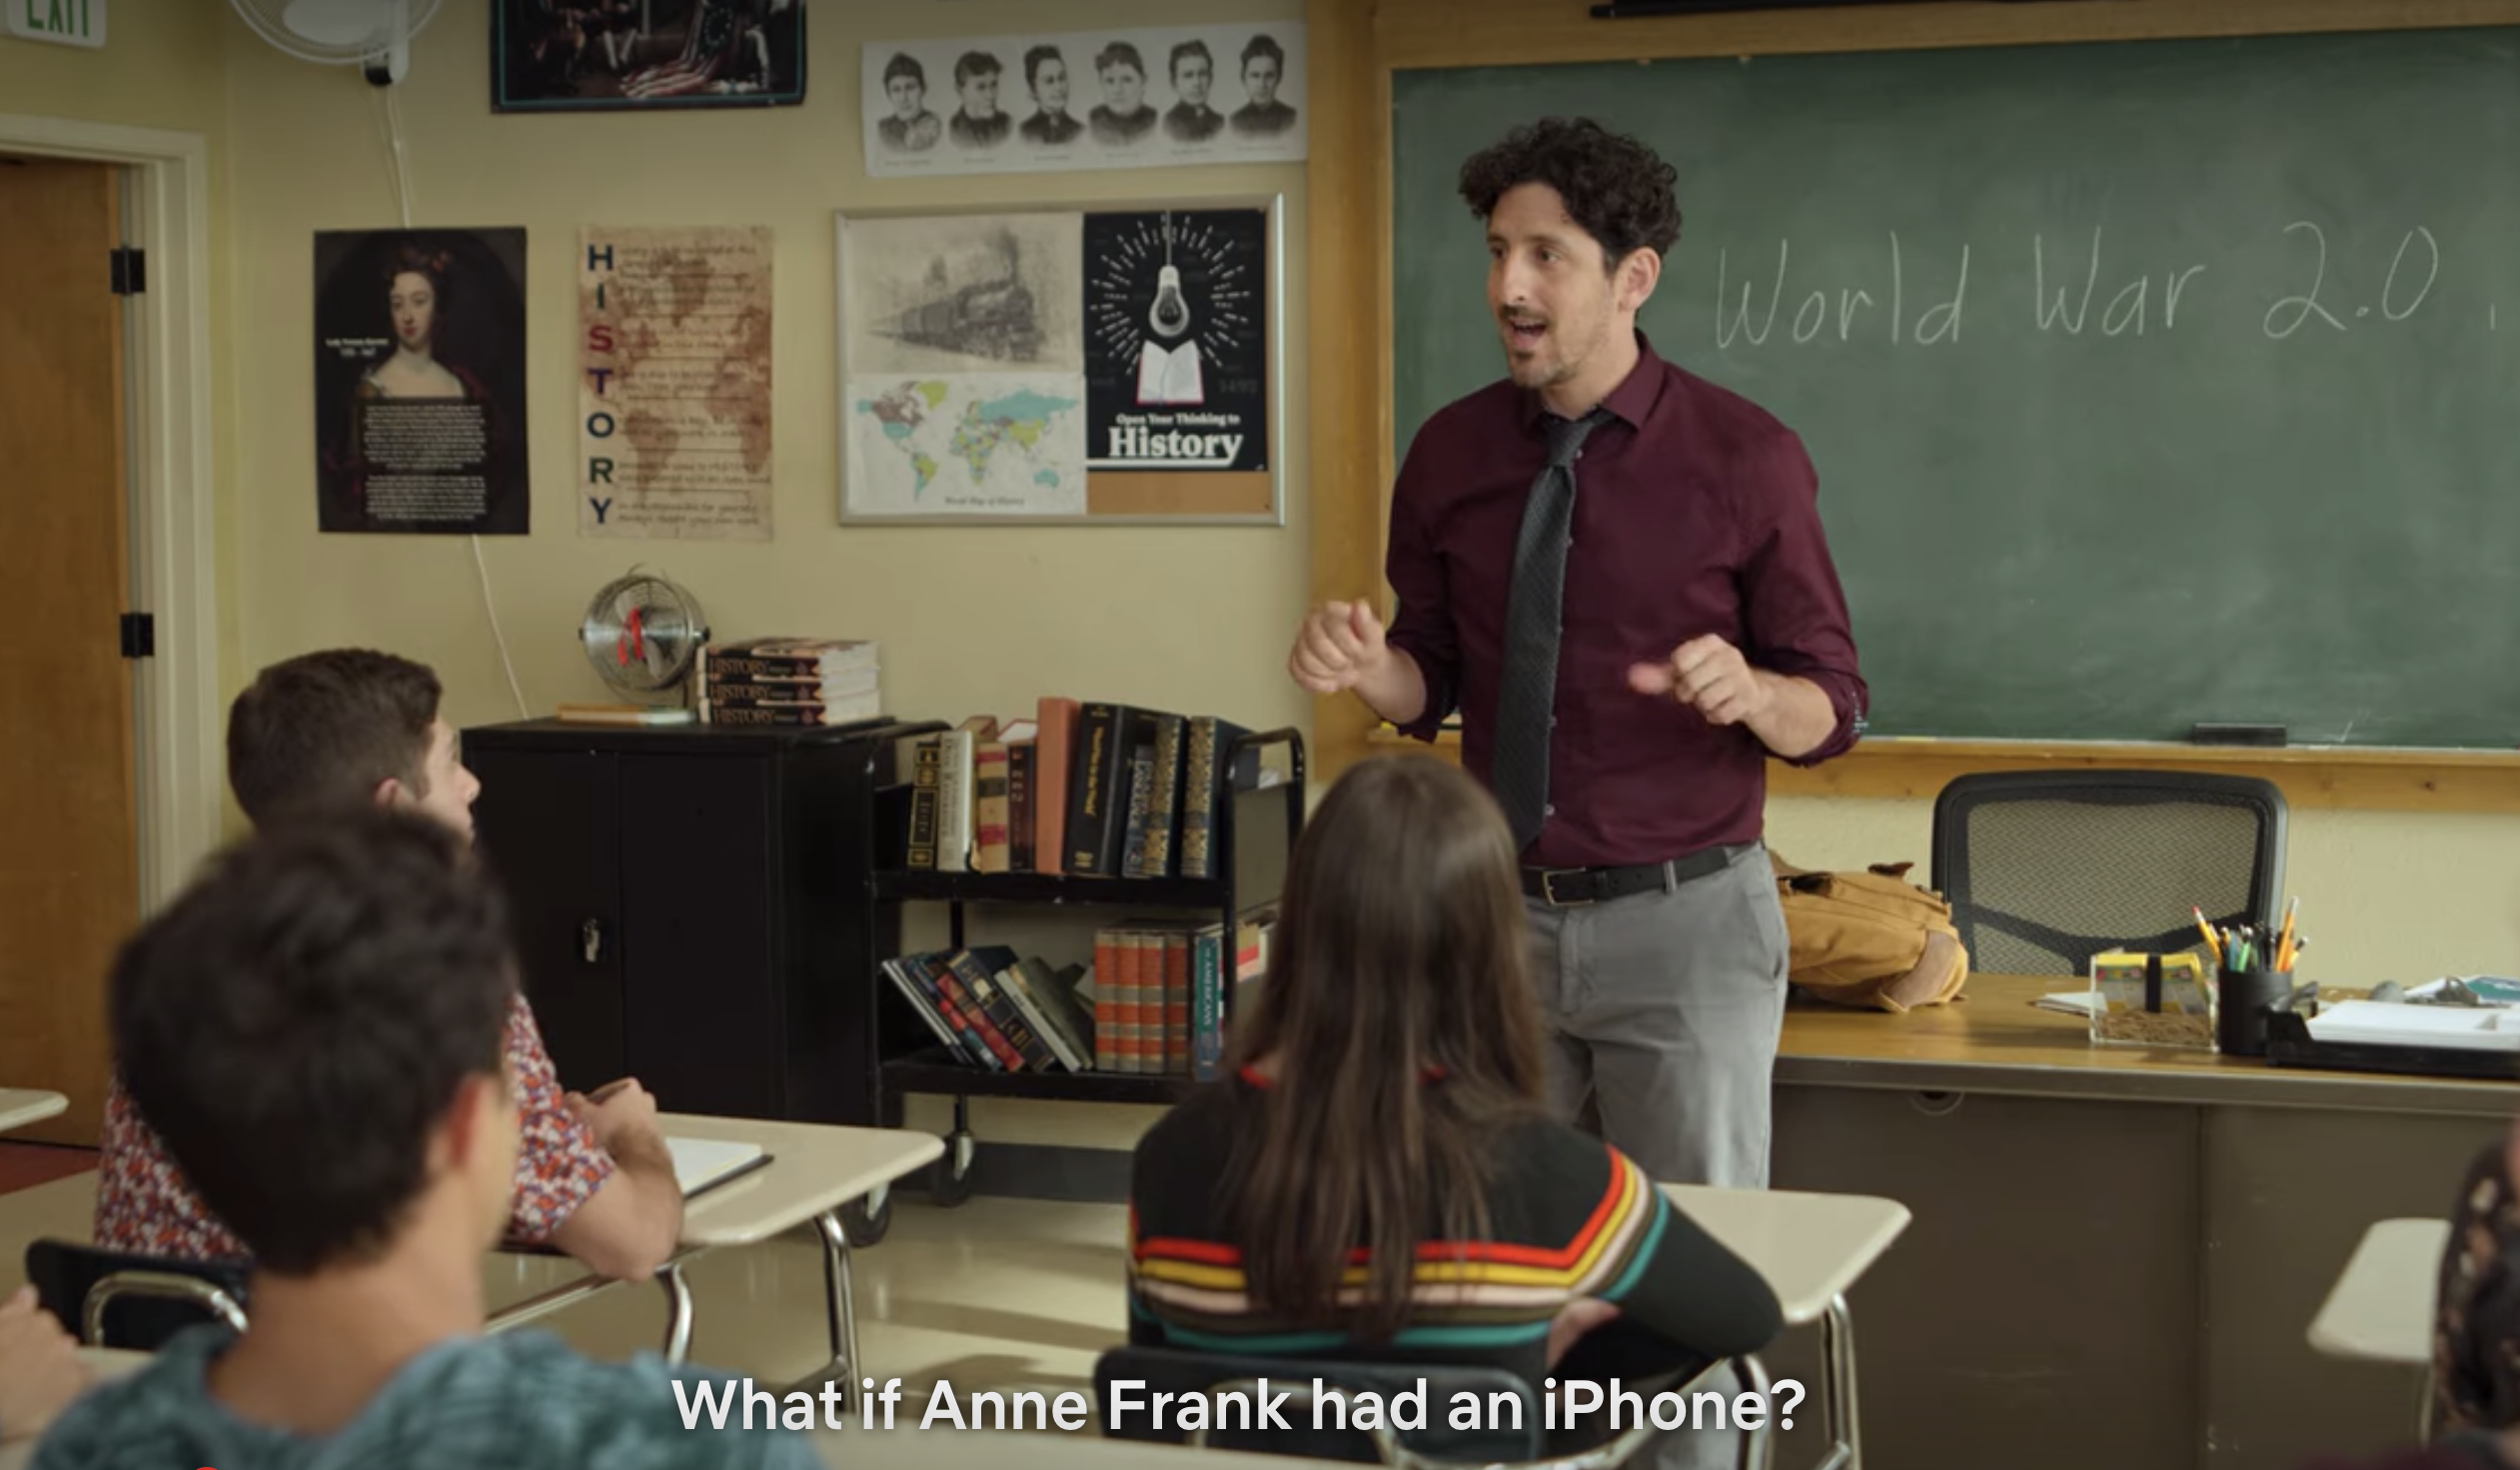 Mr Shapiro: "What if Anne Frank had an iPhone?"